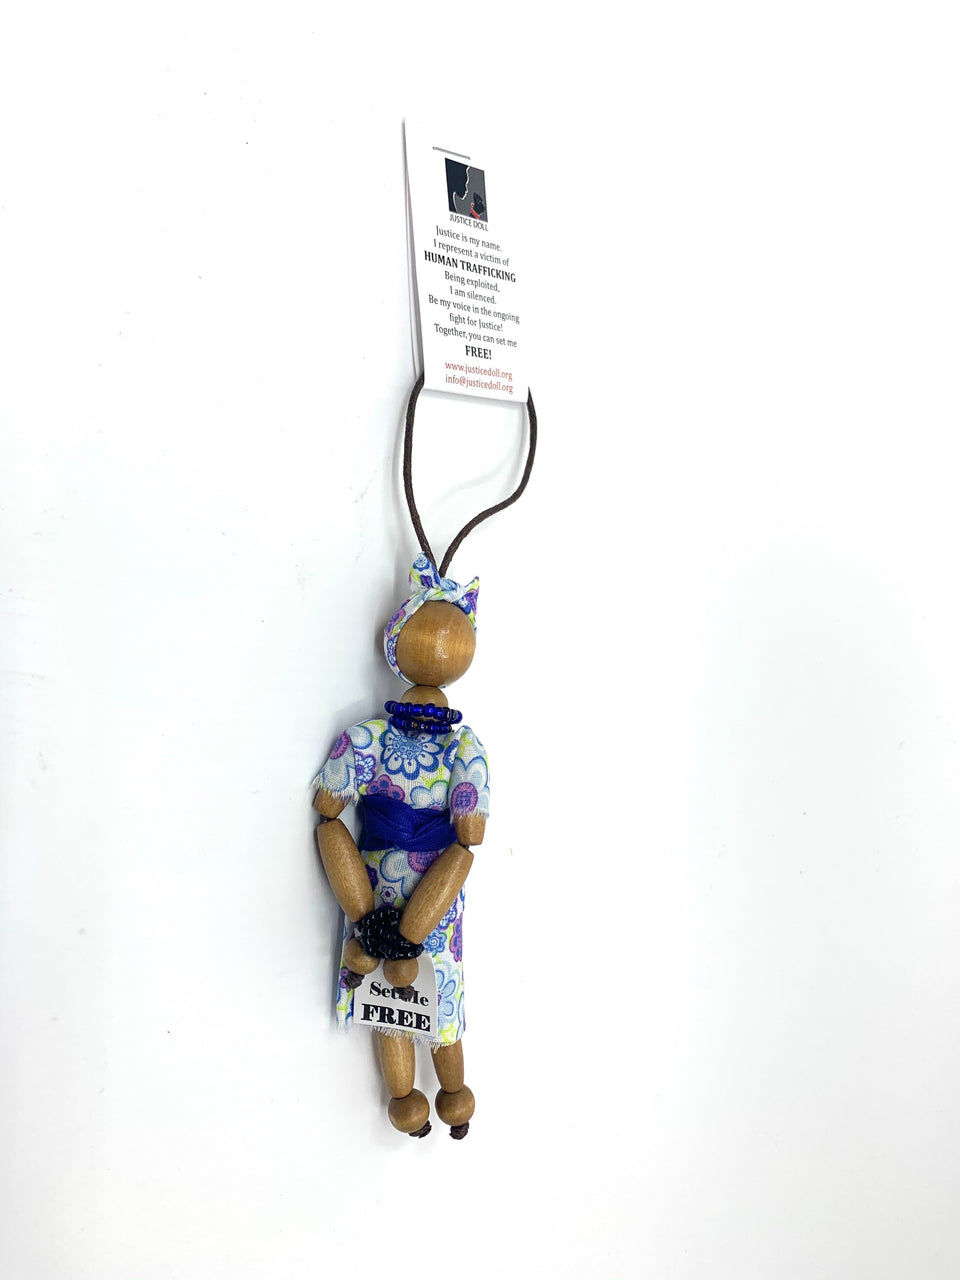 Justice Human Trafficking Doll